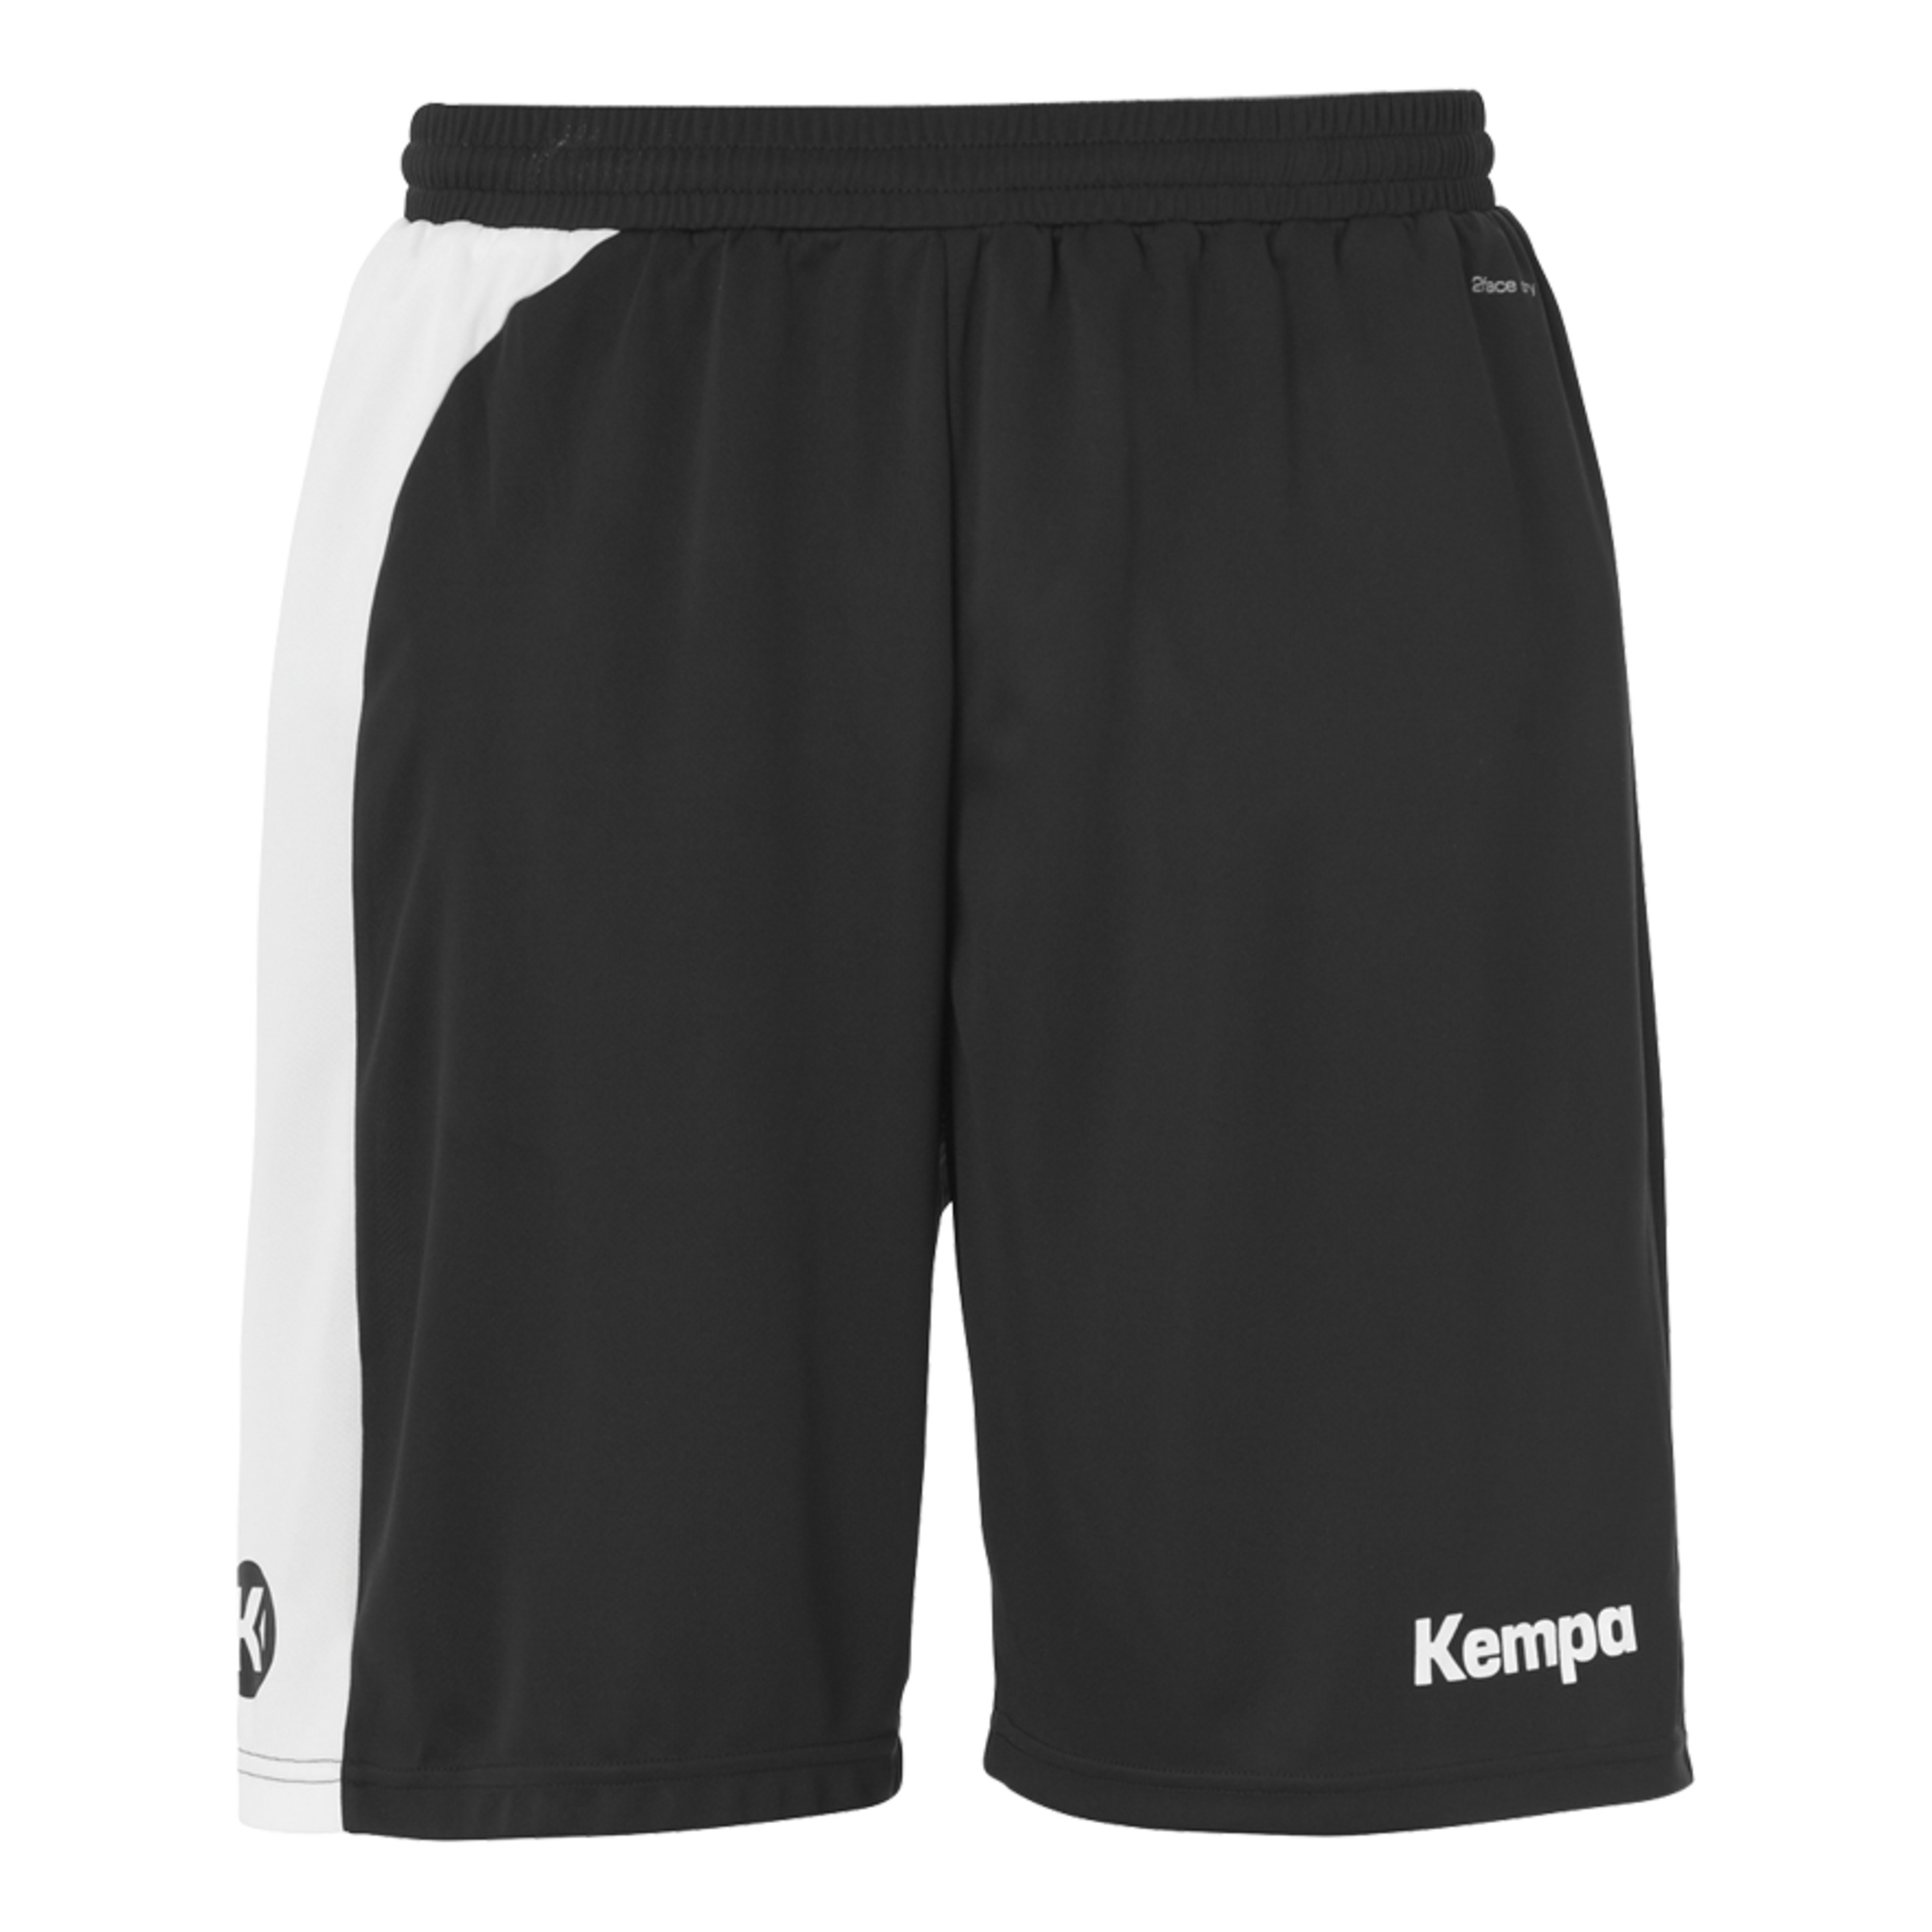 Peak Shorts Negro/blanco Kempa - negro-blanco - 